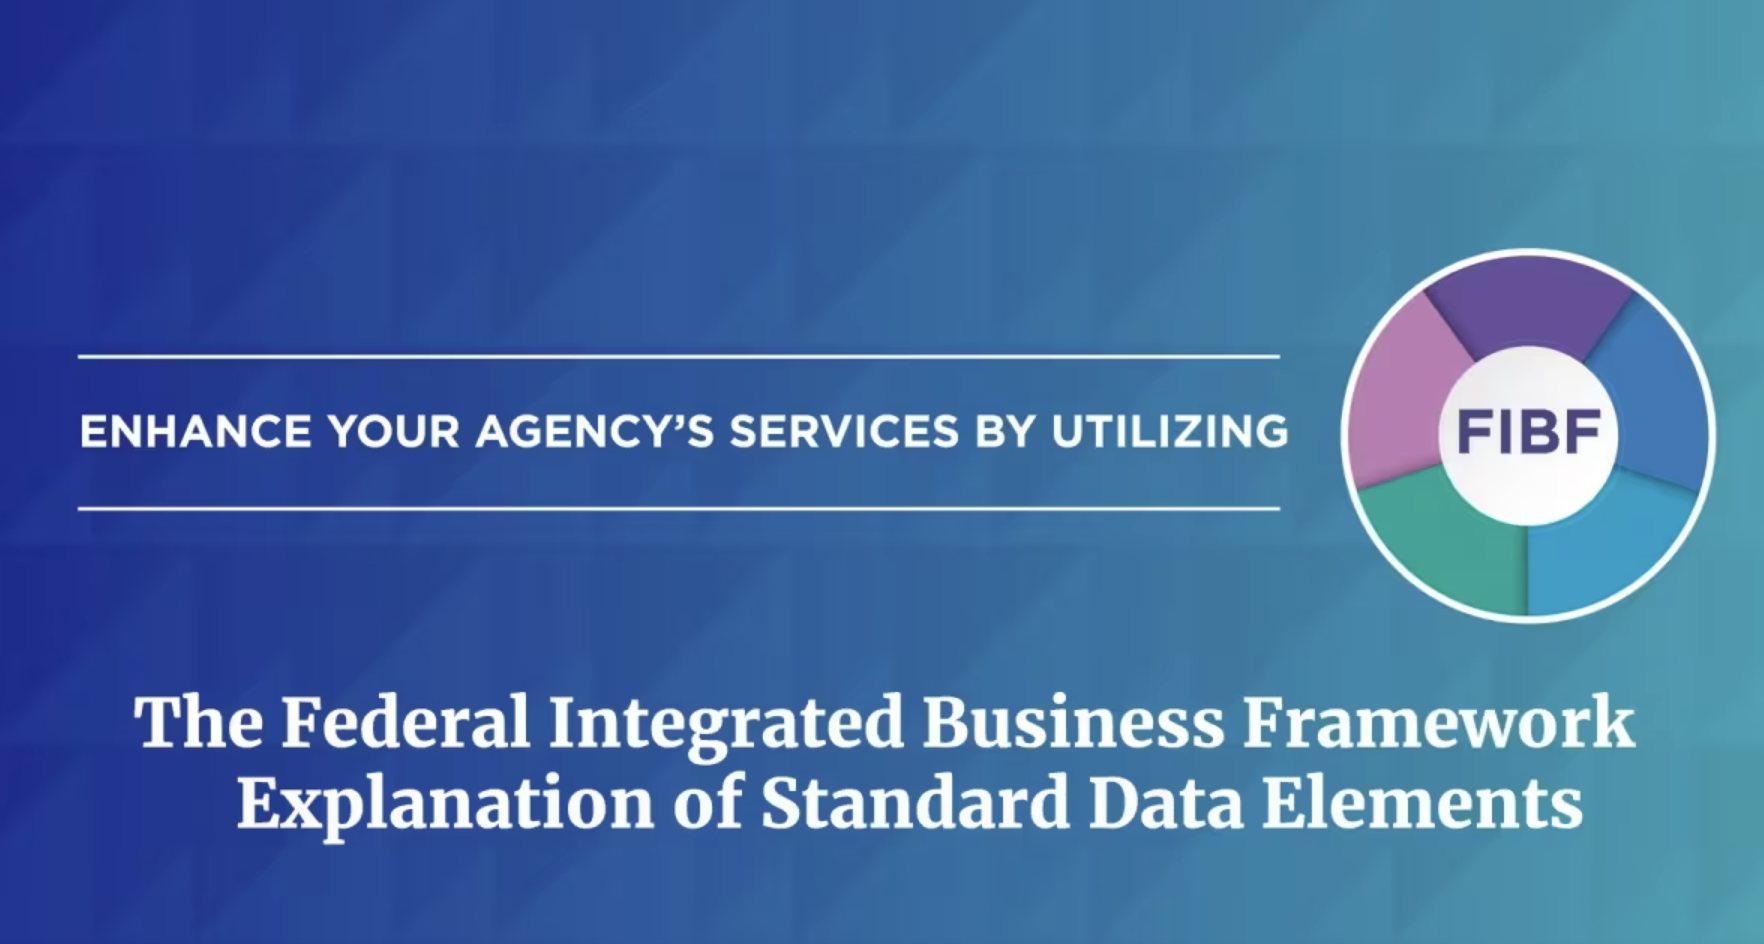 FIBF Business Stadard Data Element Image